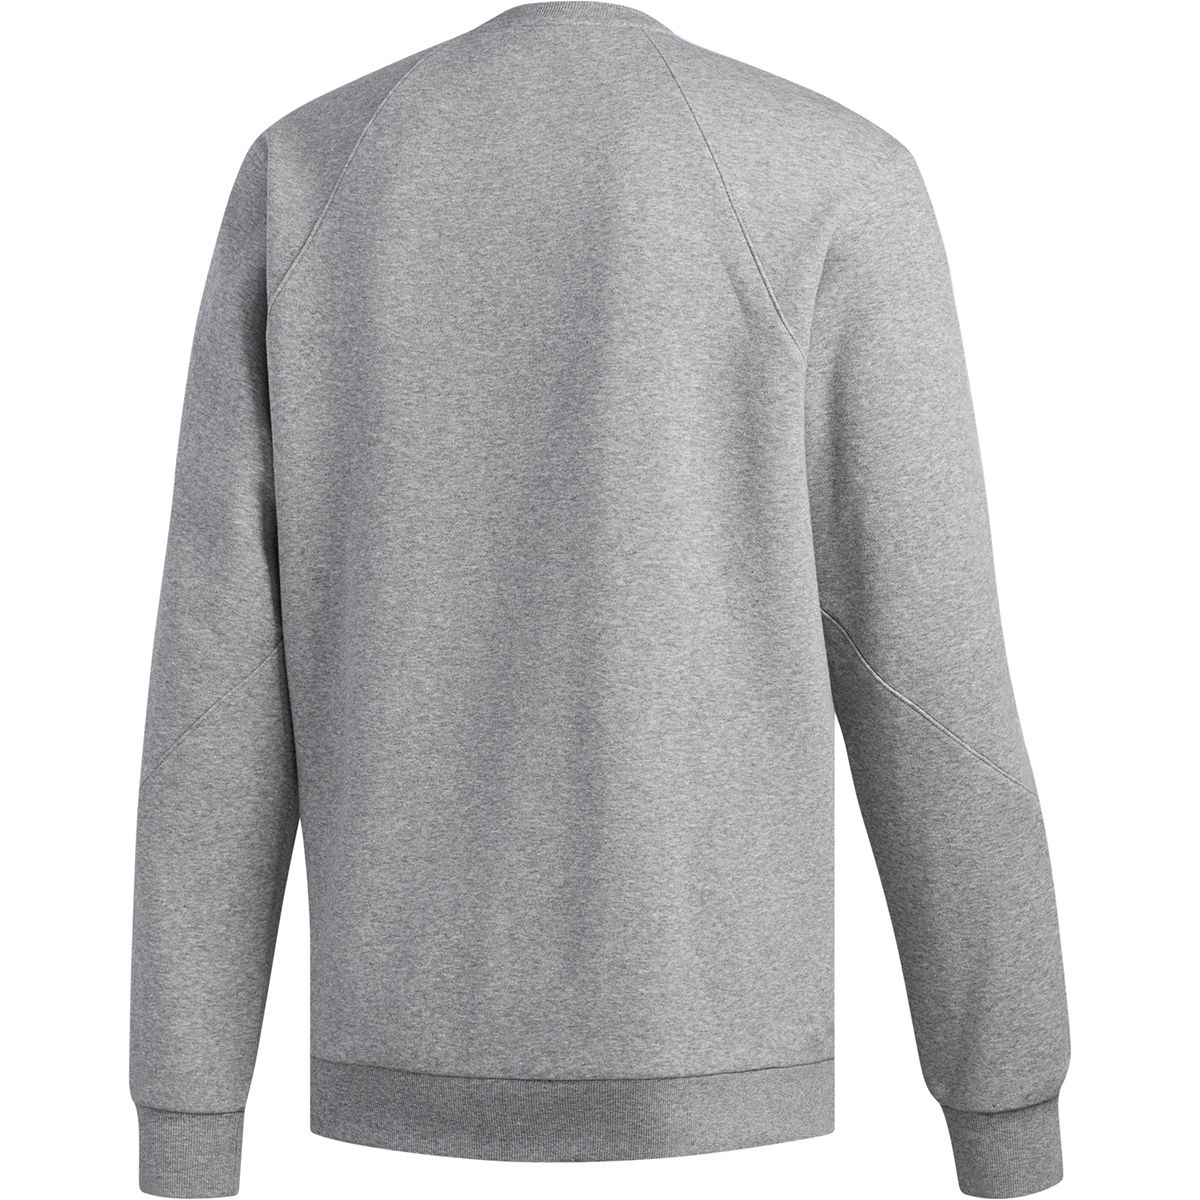 Adidas Insley Crew Sweatshirt - Men's - Clothing